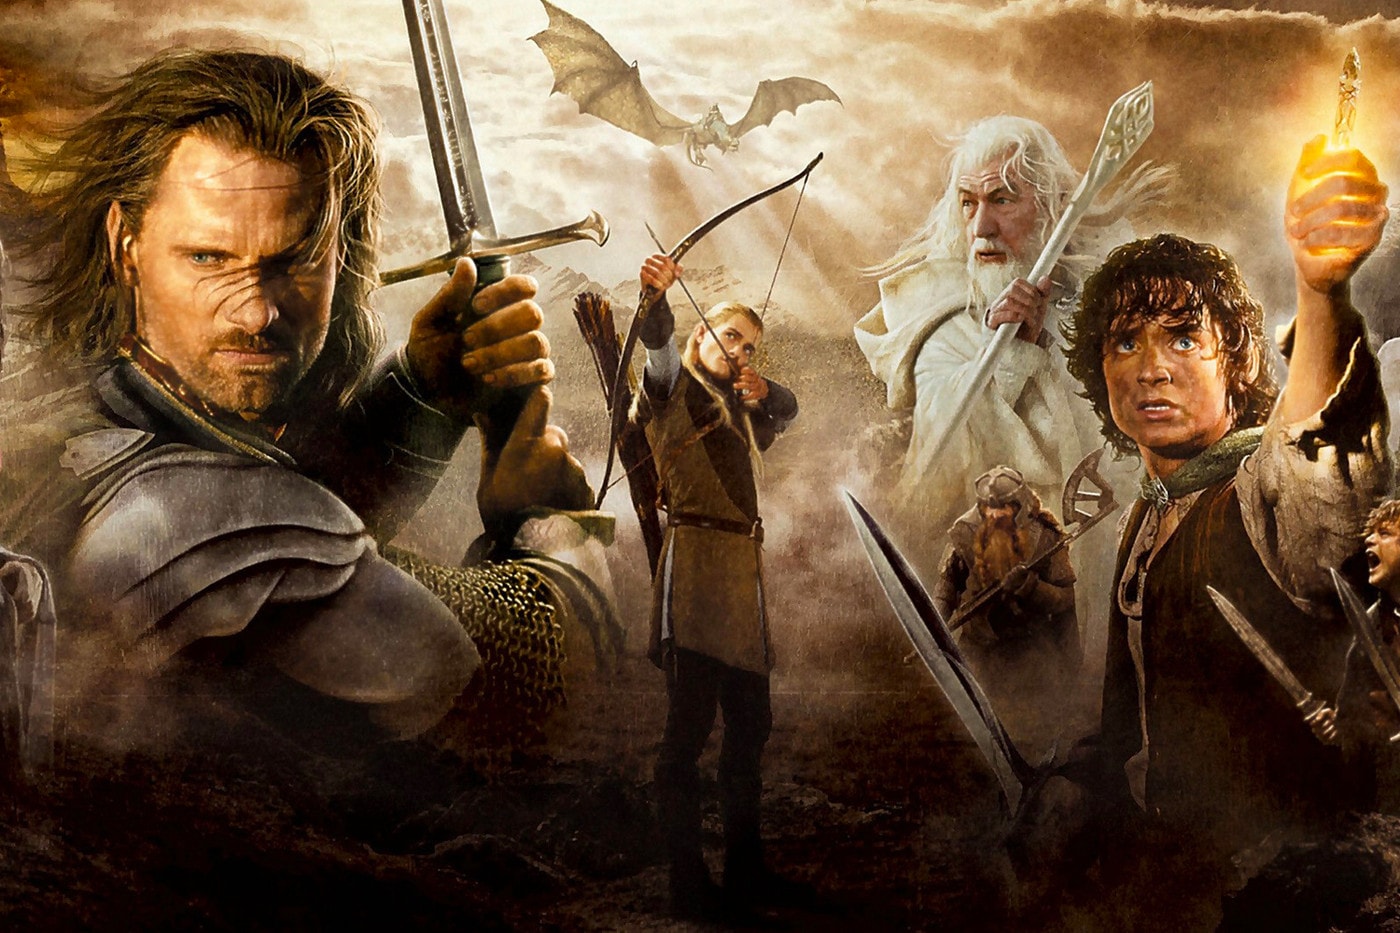 Lord of the Rings LOTR Aragorn Warner Bros Mobile Game